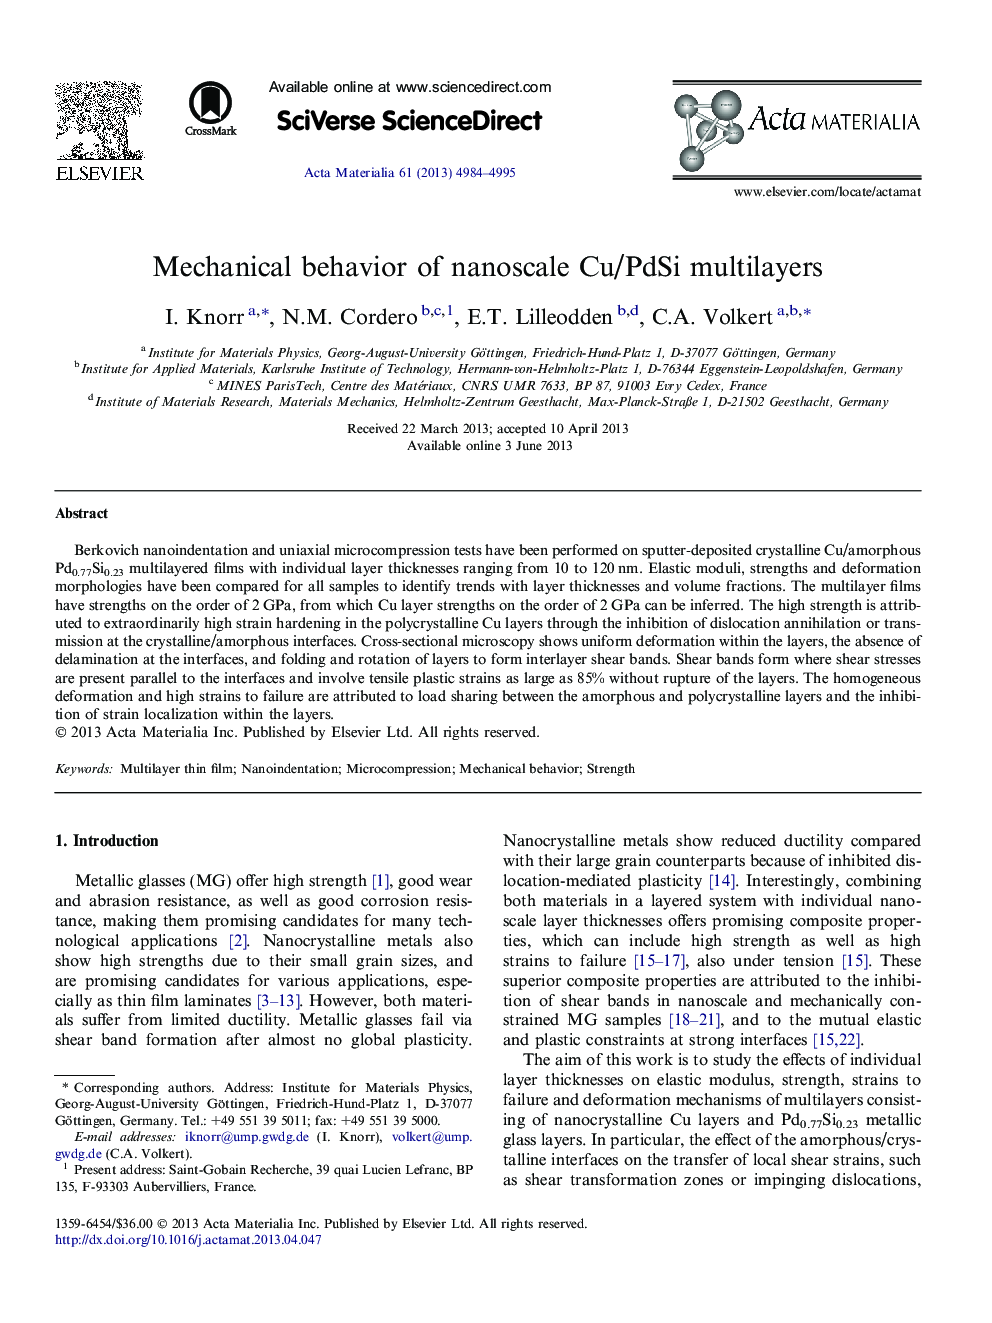 Mechanical behavior of nanoscale Cu/PdSi multilayers